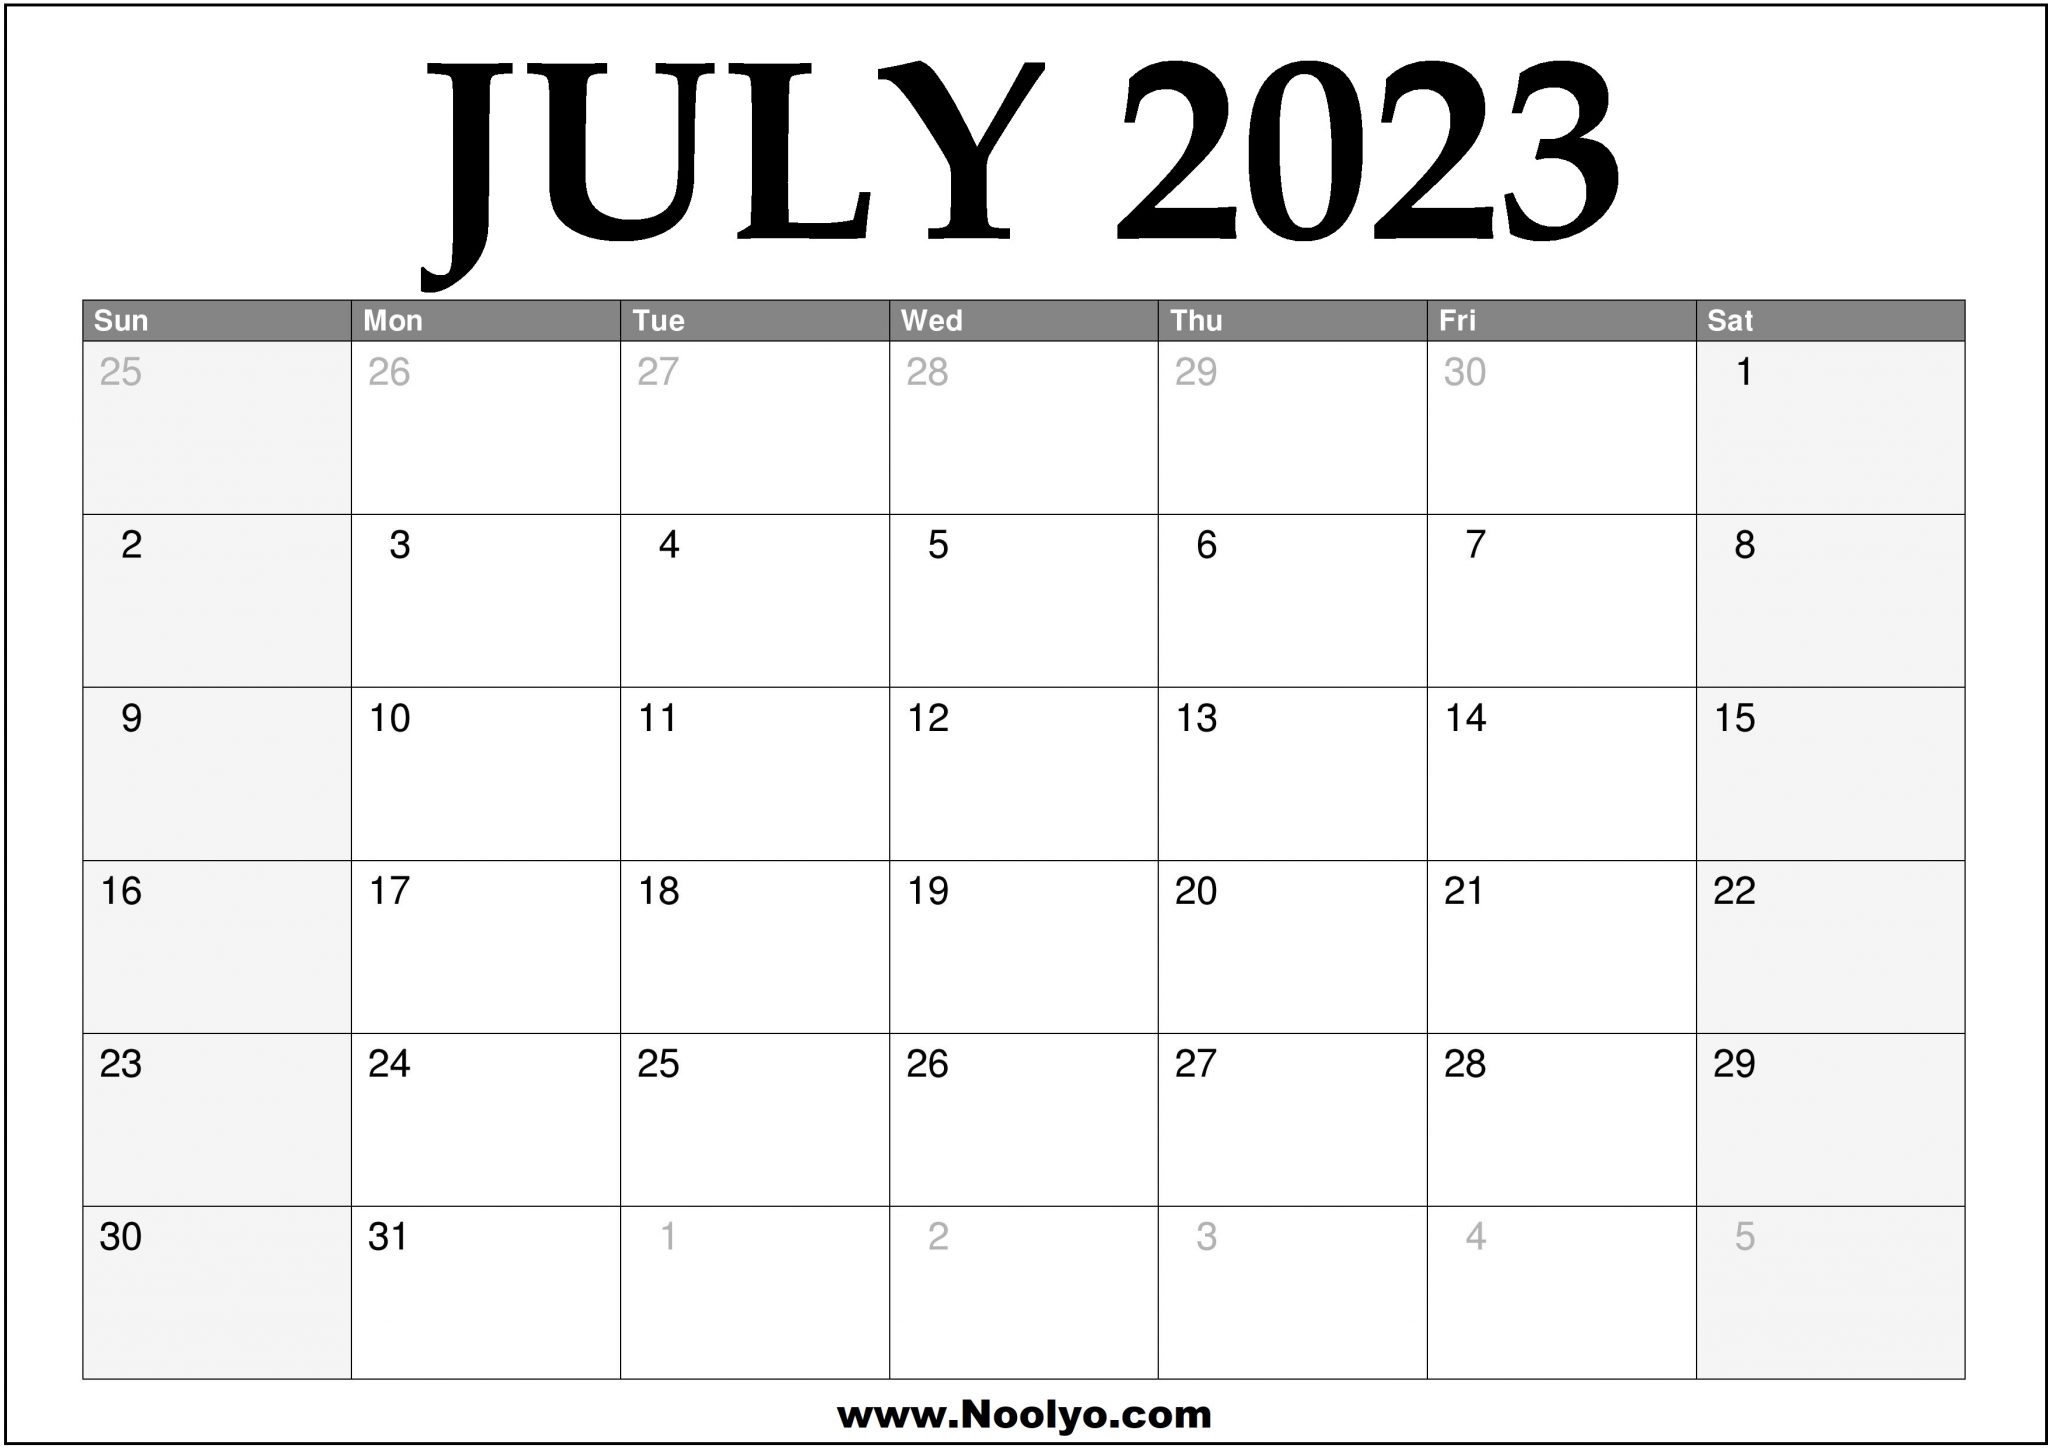 July 2023 Calendar Free Printable Calendar July 2023 Calendar Free Printable Calendar Free